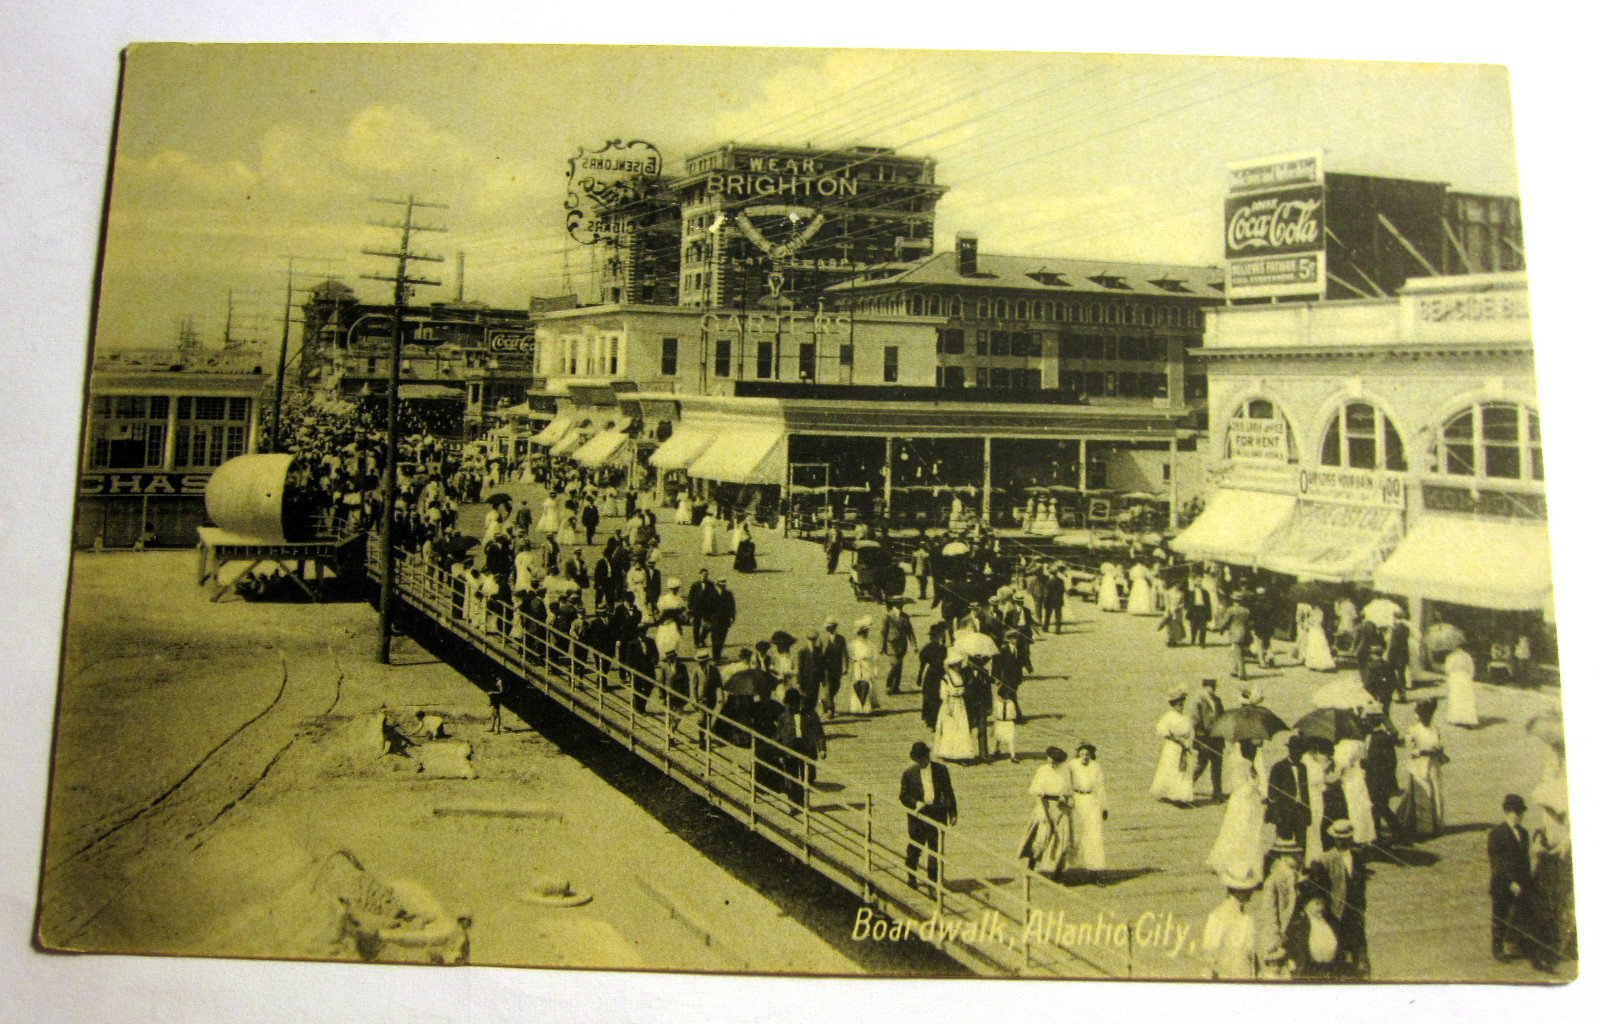 Atlantic City - Looking down at the boardwalk - c 1910